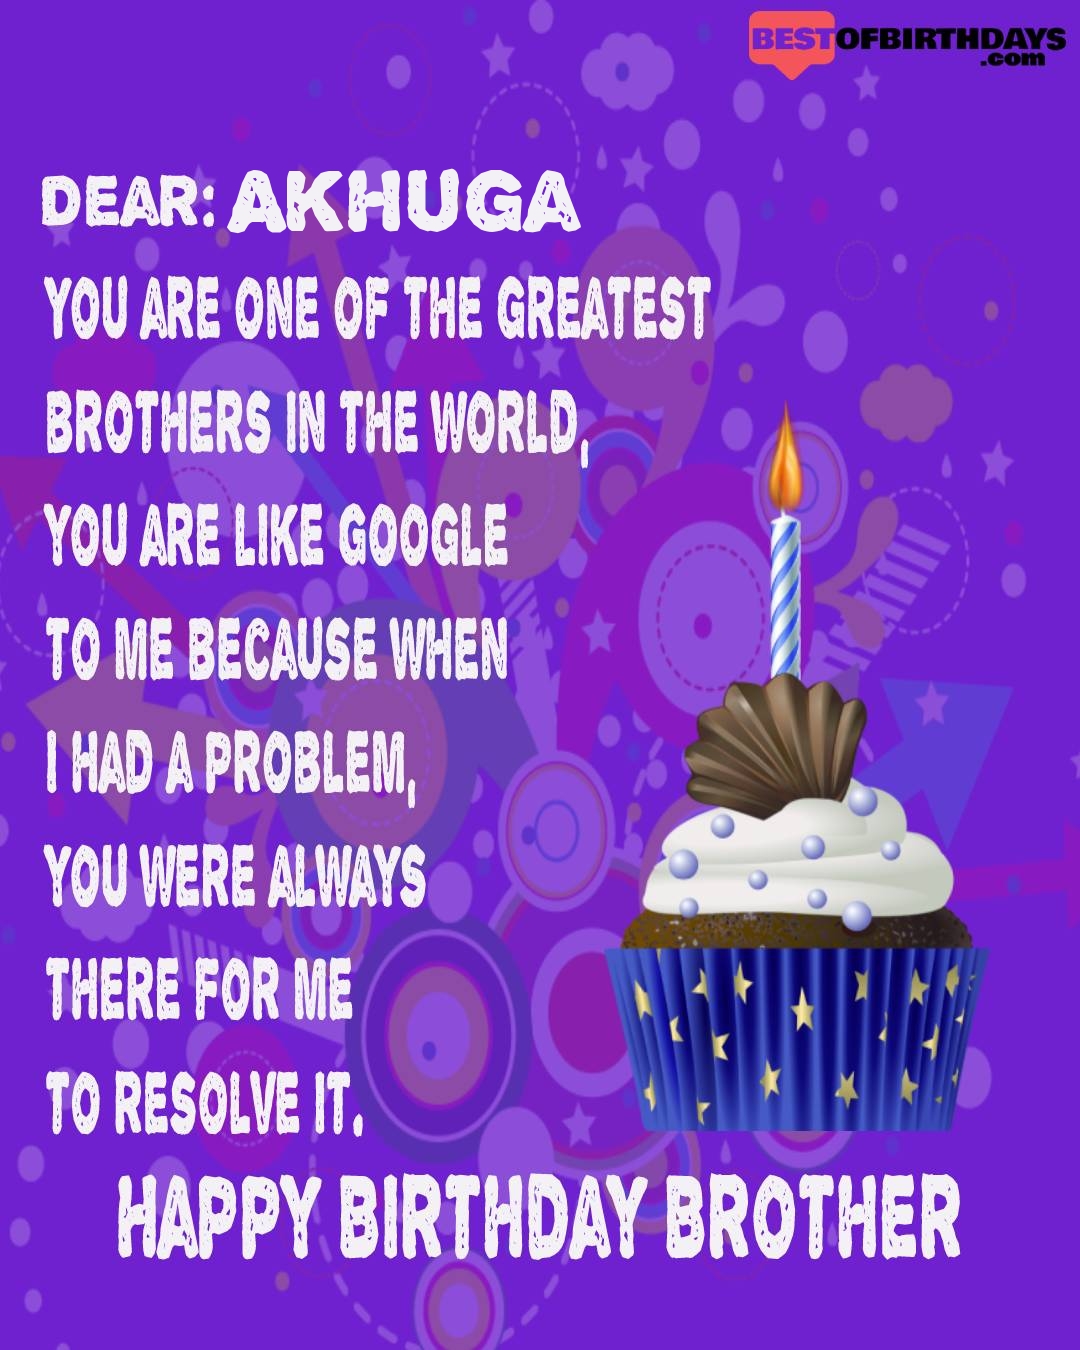 Happy birthday akhuga bhai brother bro